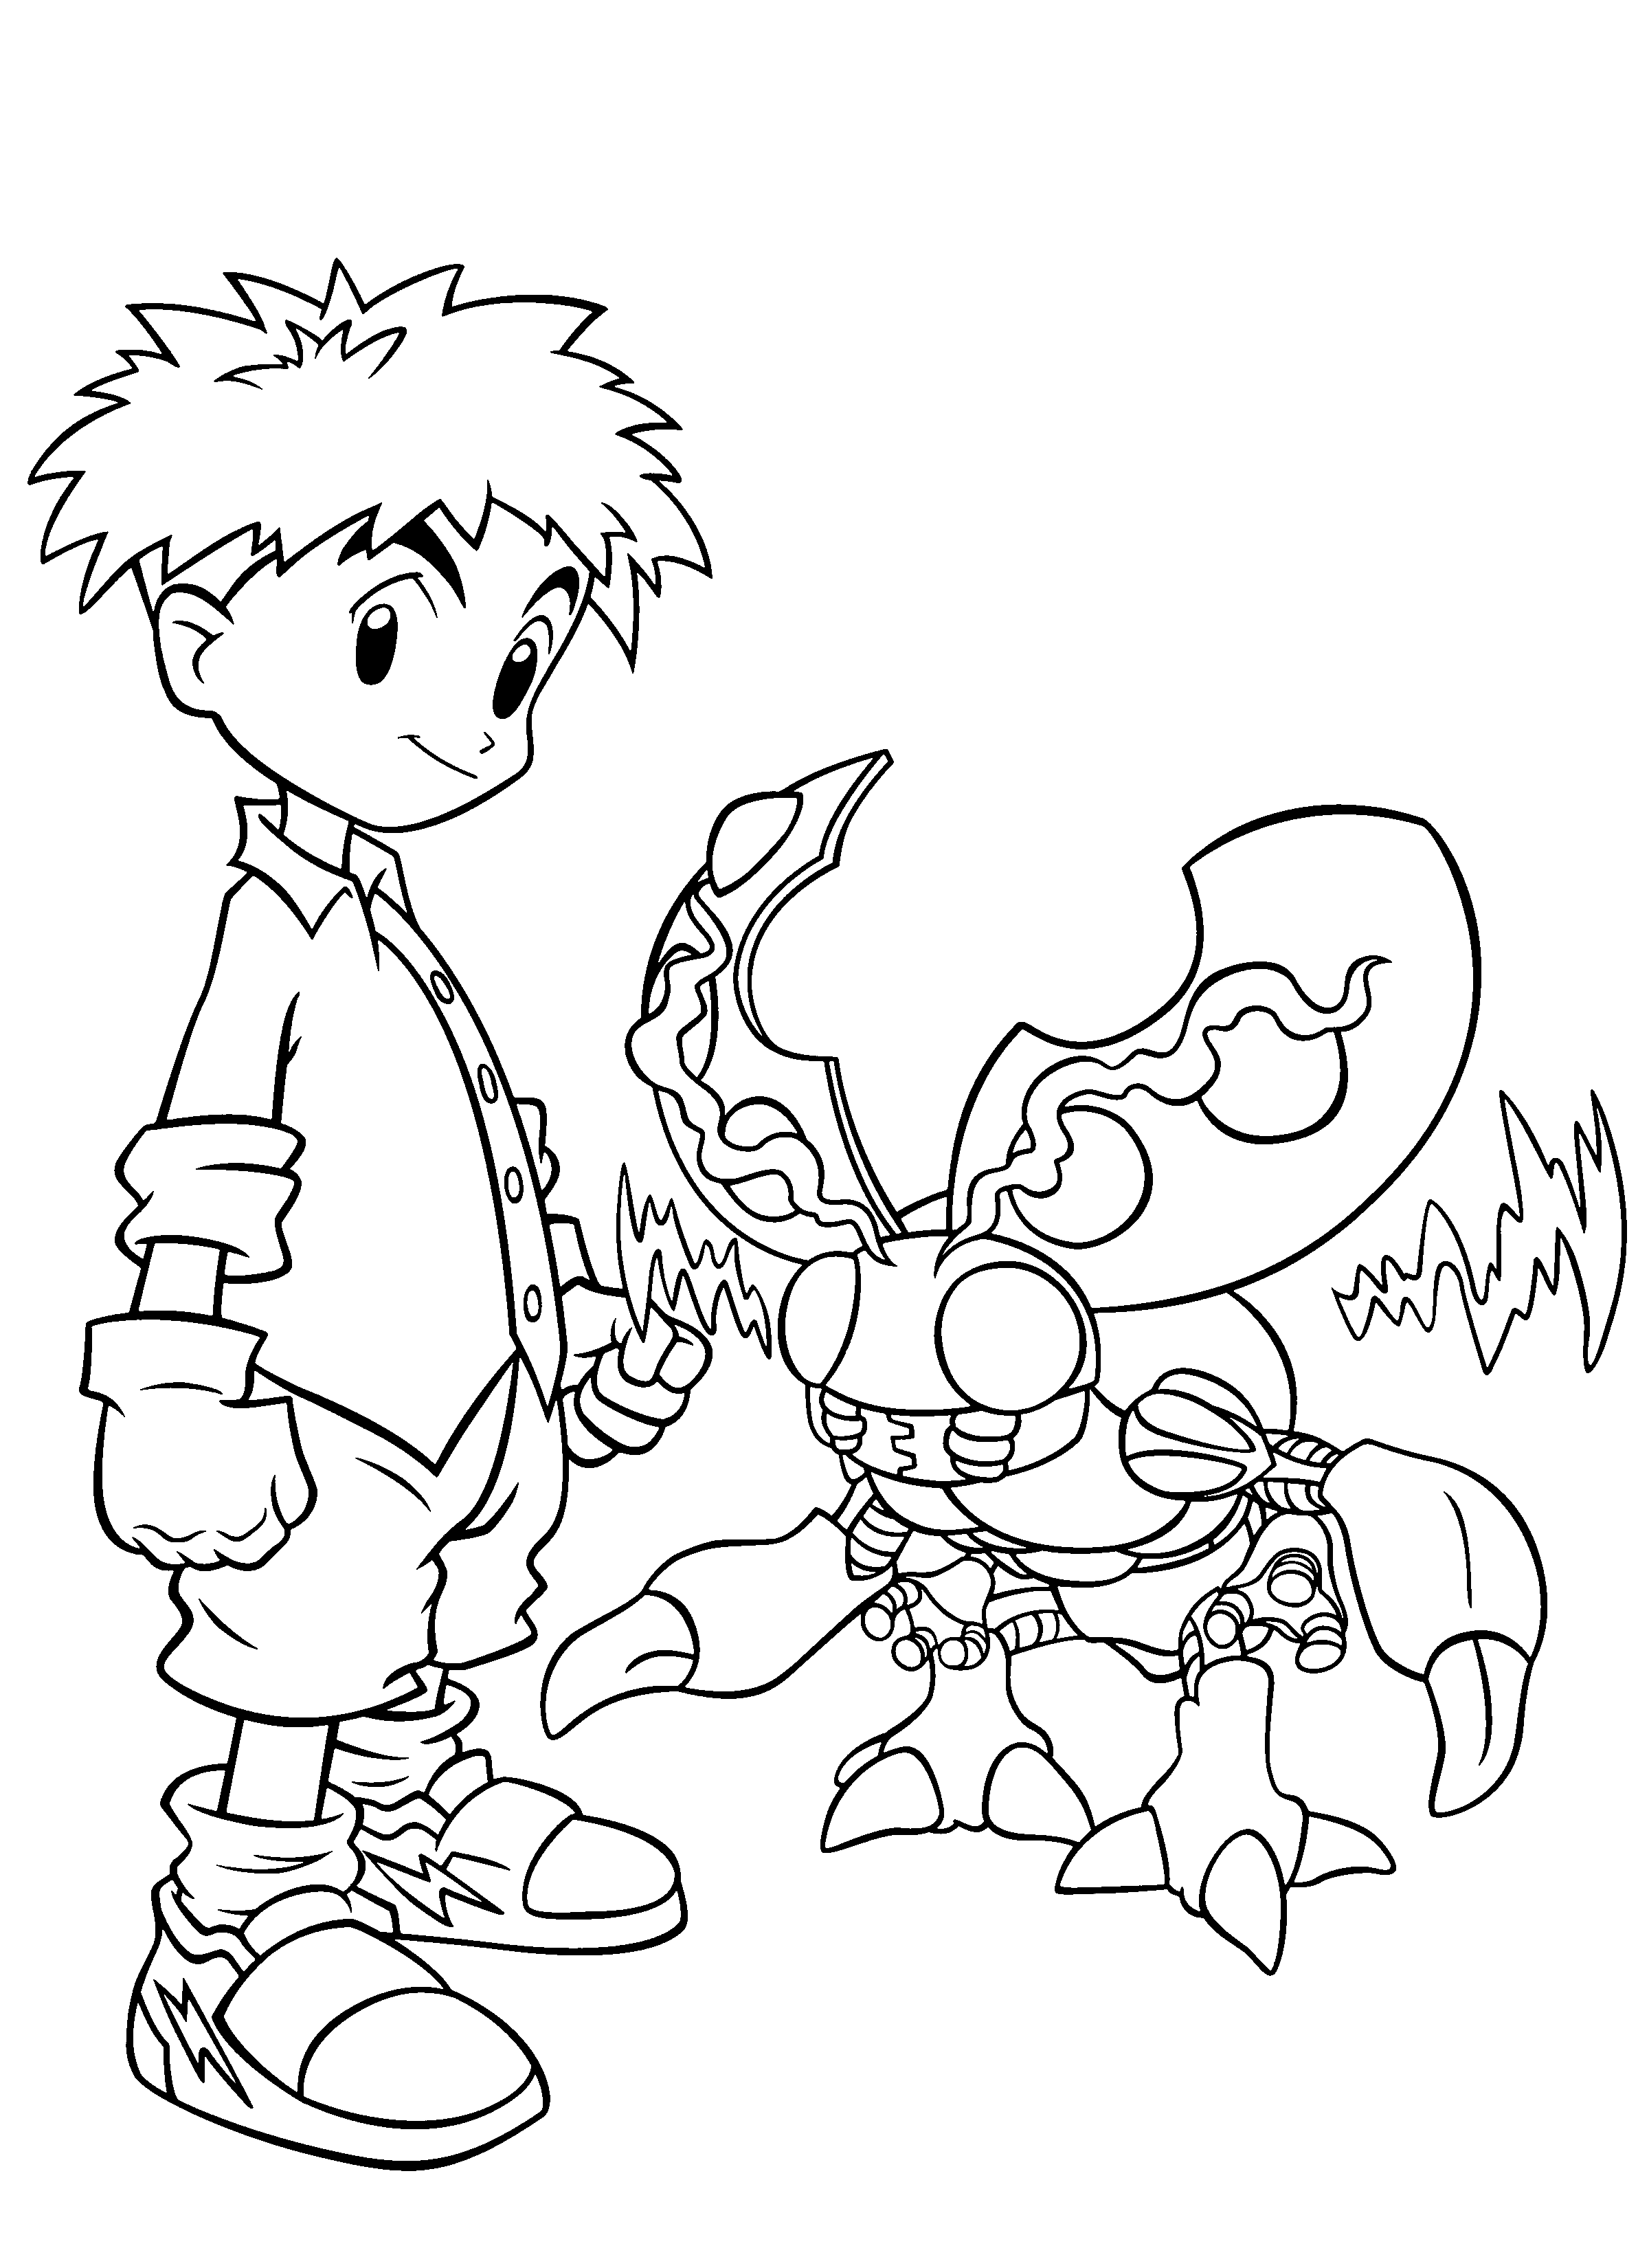 Dibujo para colorear: Digimon (Dibujos animados) #51567 - Dibujos para Colorear e Imprimir Gratis